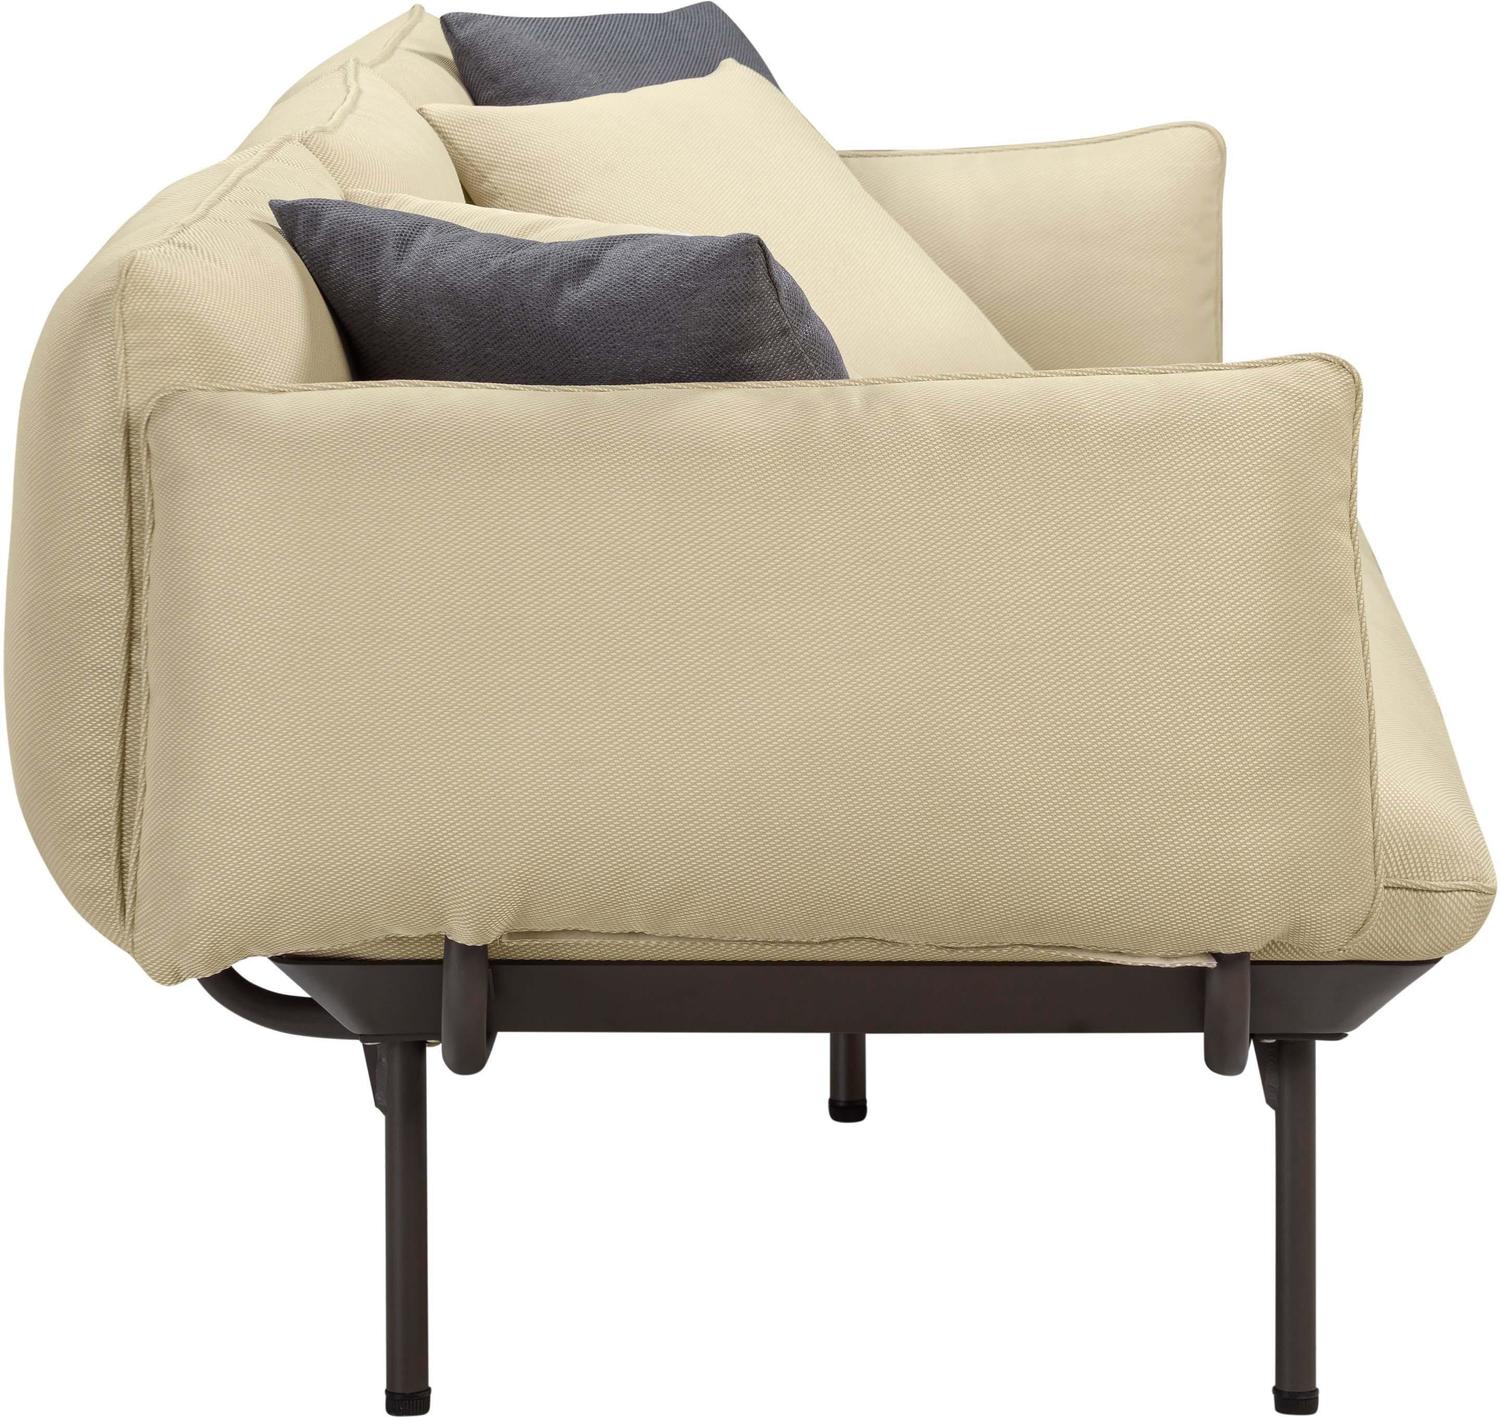 green modern sectional Contemporary Design Furniture Sofas Beige